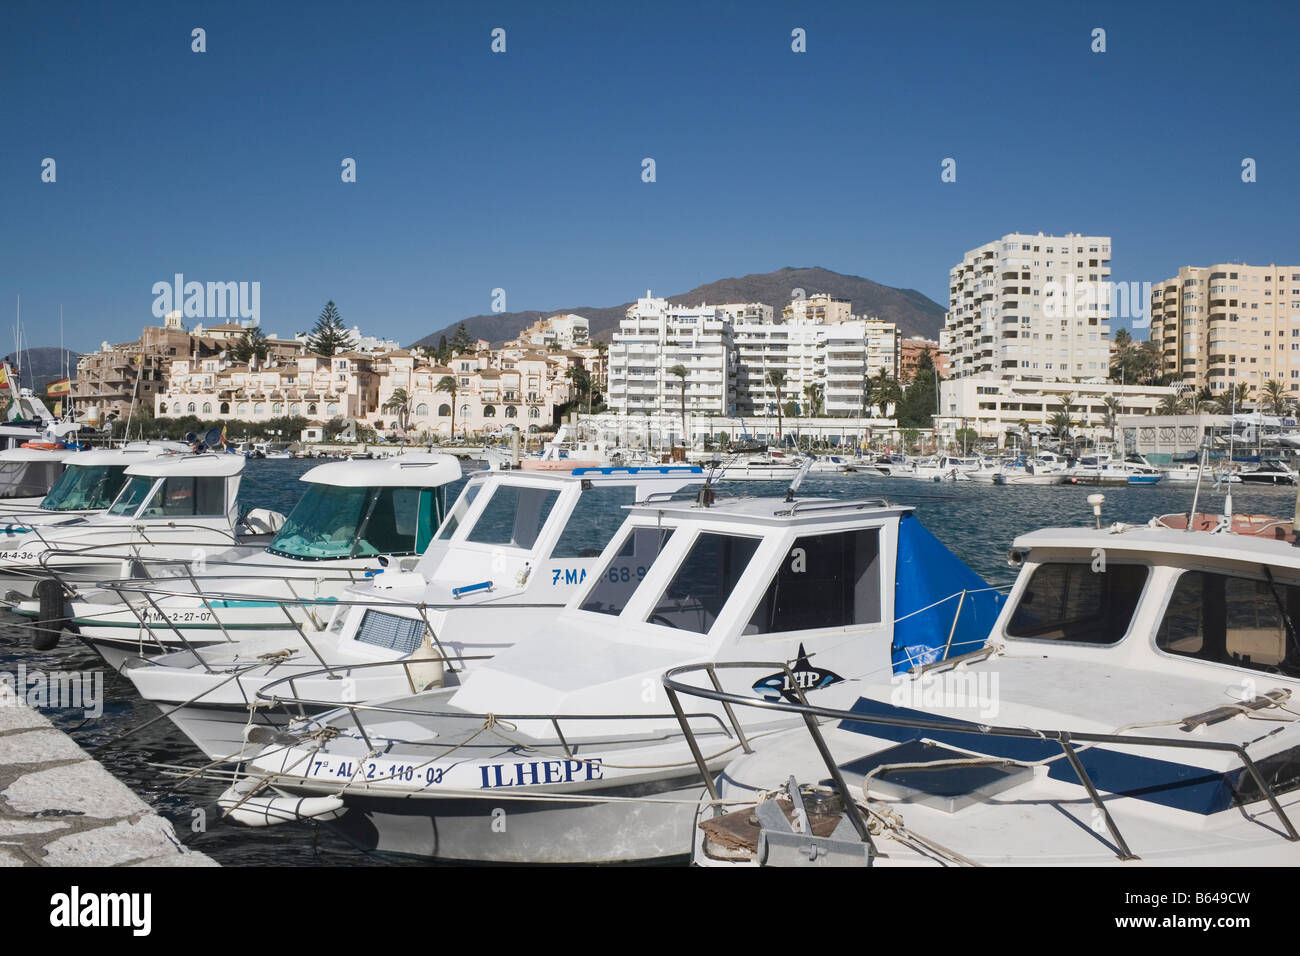 Estepona Costa del Sol Malaga Province Spain Boats at anchor in port Stock Photo